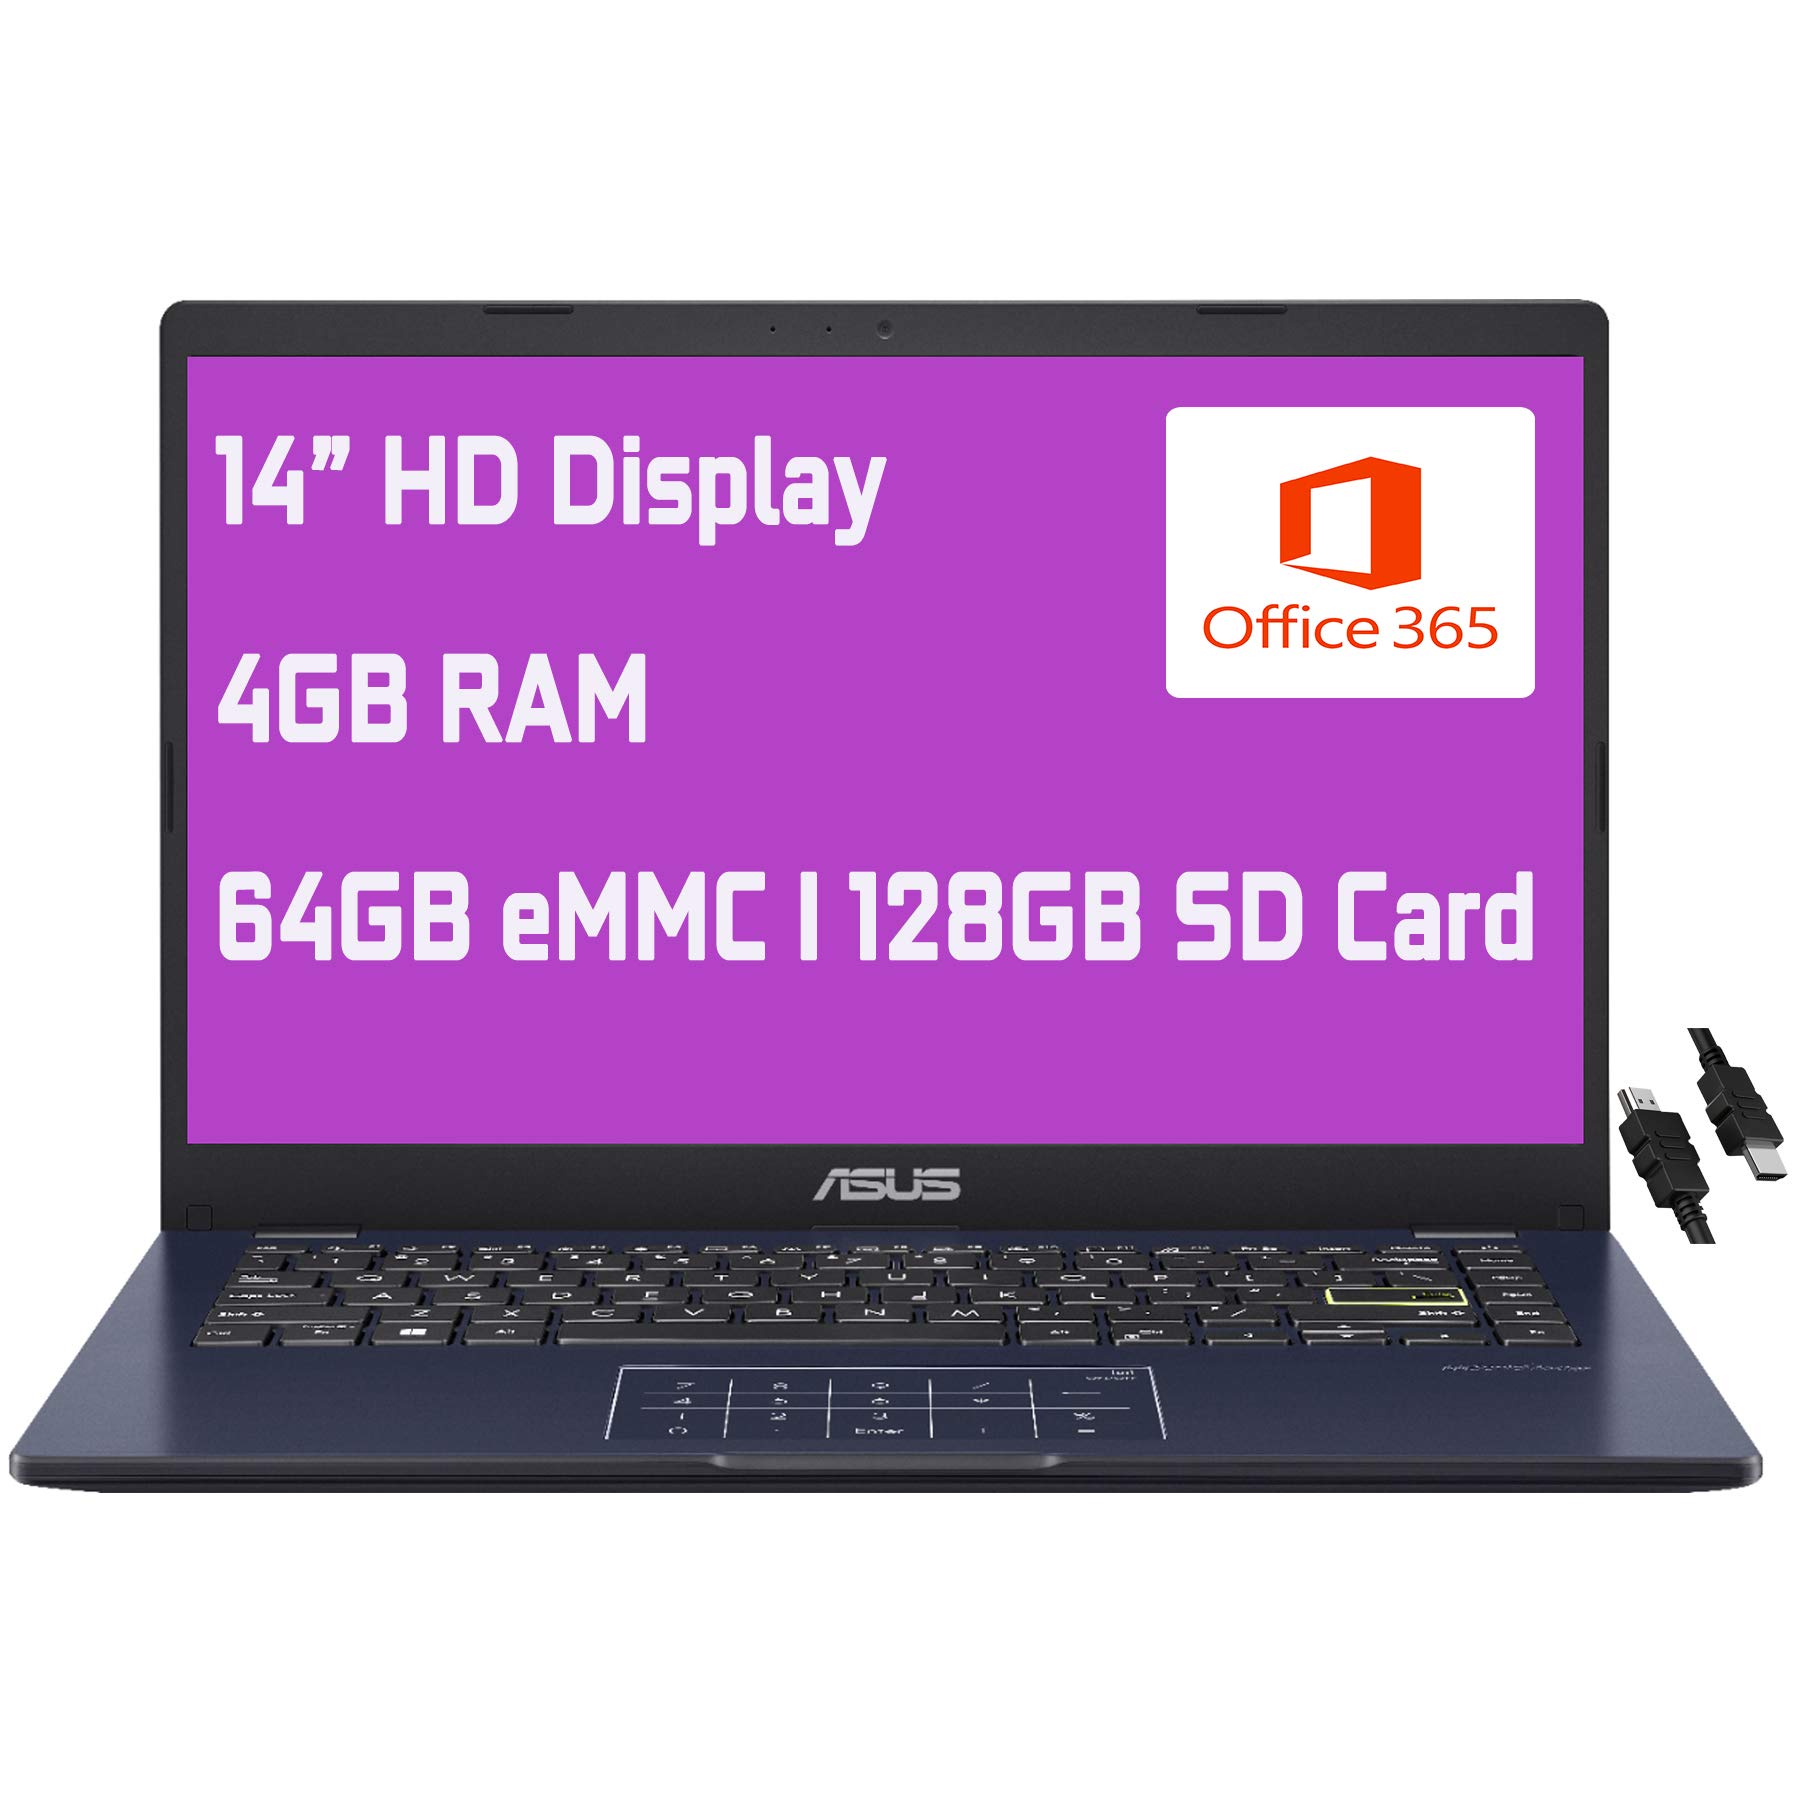 Mua Asus Vivobook E410ma Thin And Light Business Laptop 14” Hd Display Intel Celeron N4020 4gb 3346